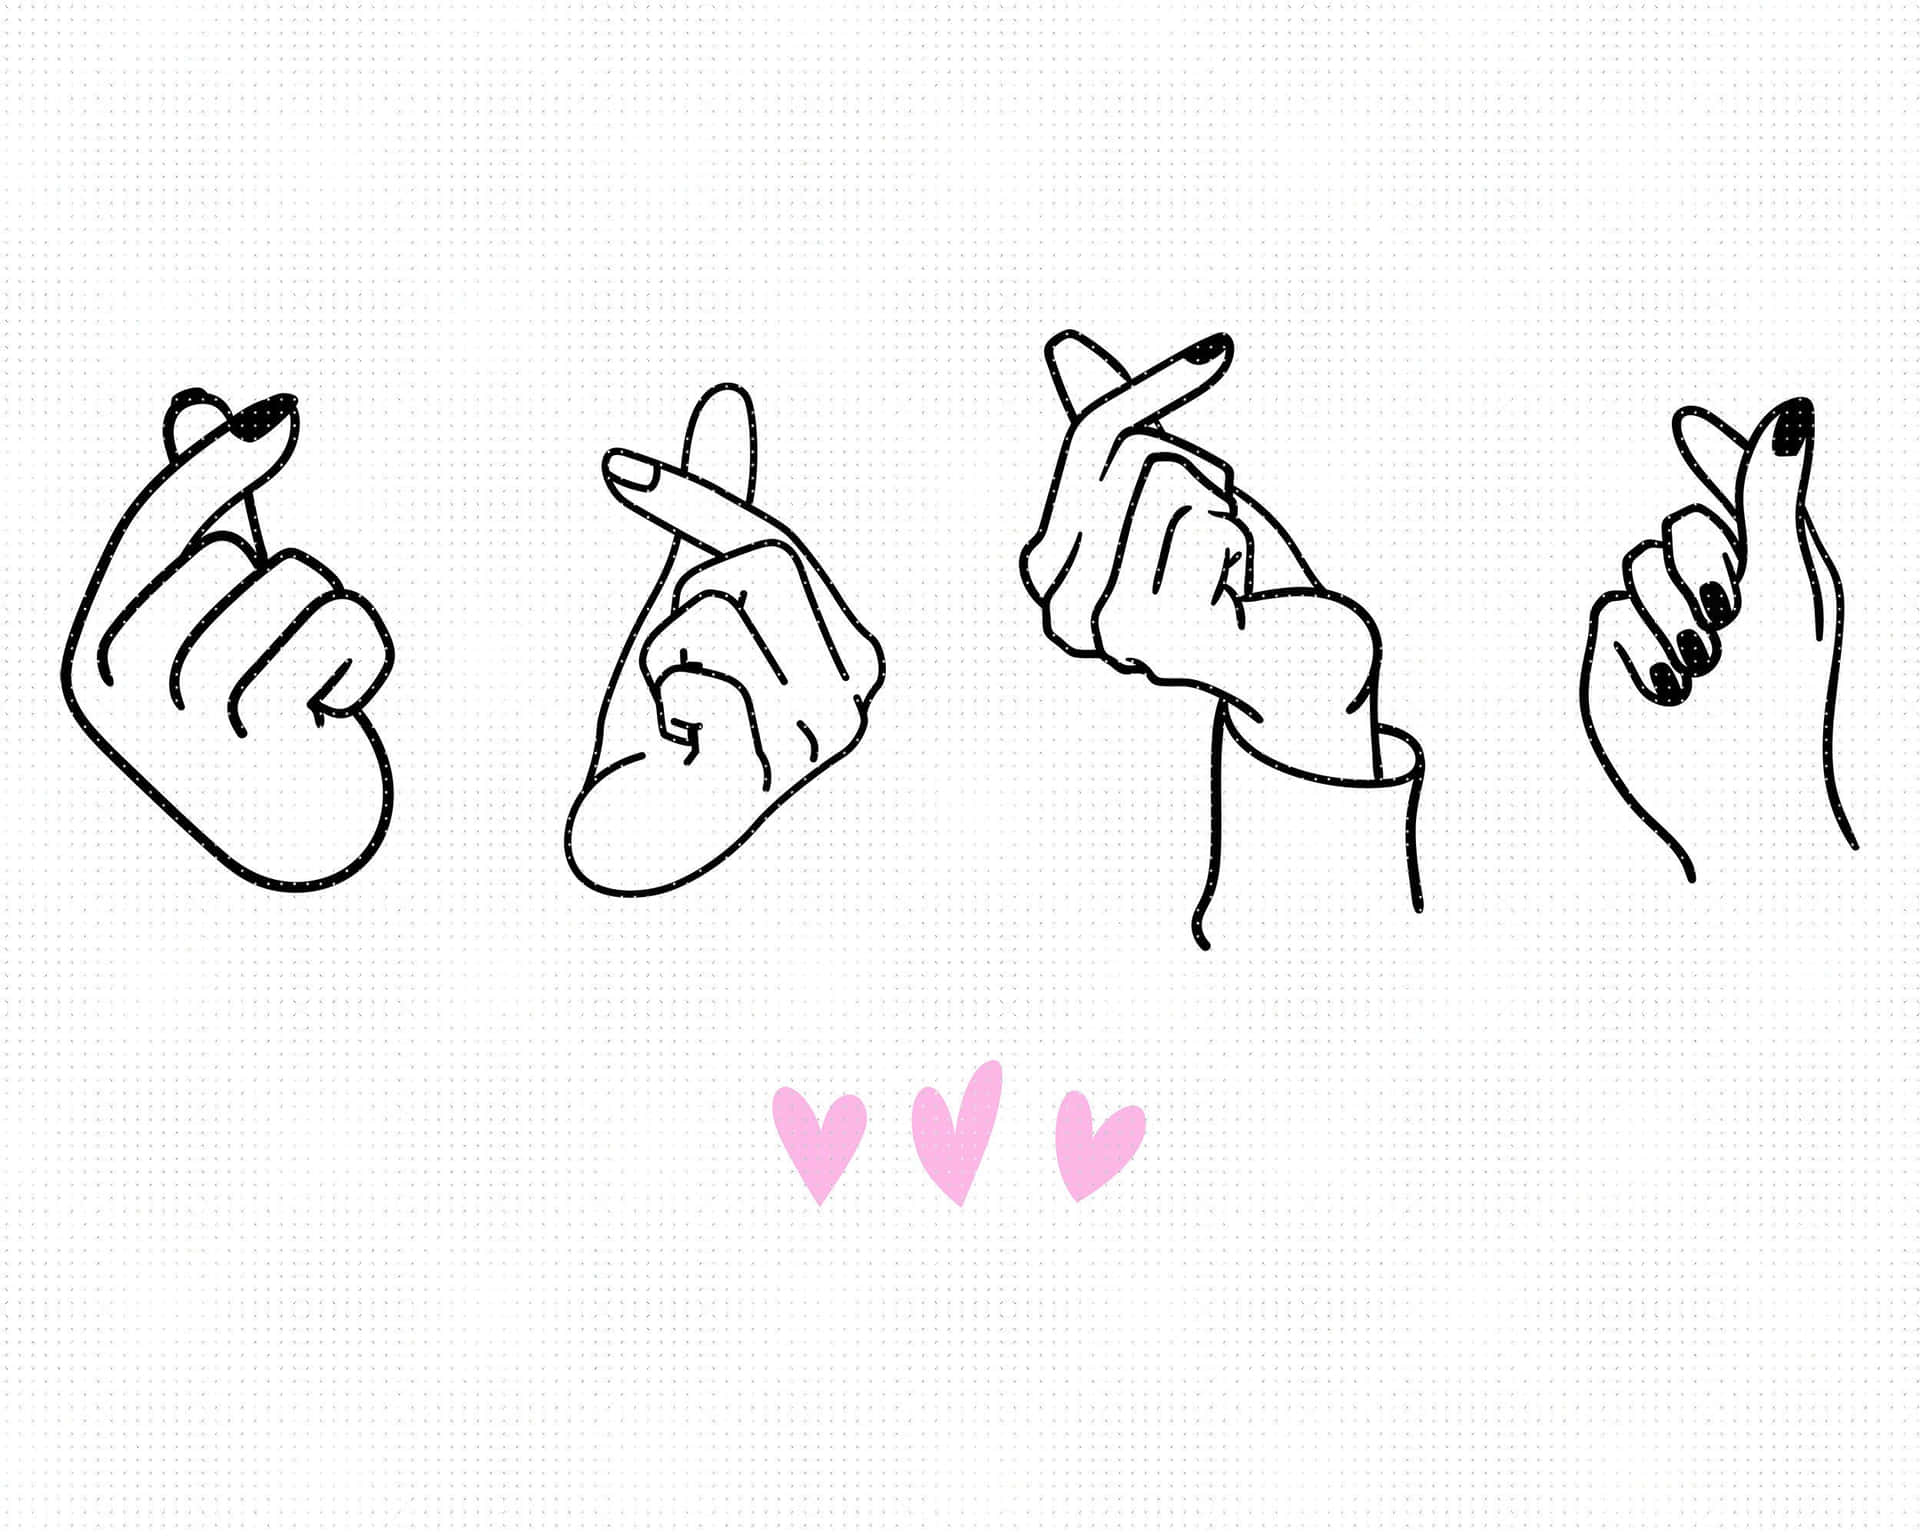 Bts Finger Heart Four Hand Gesture